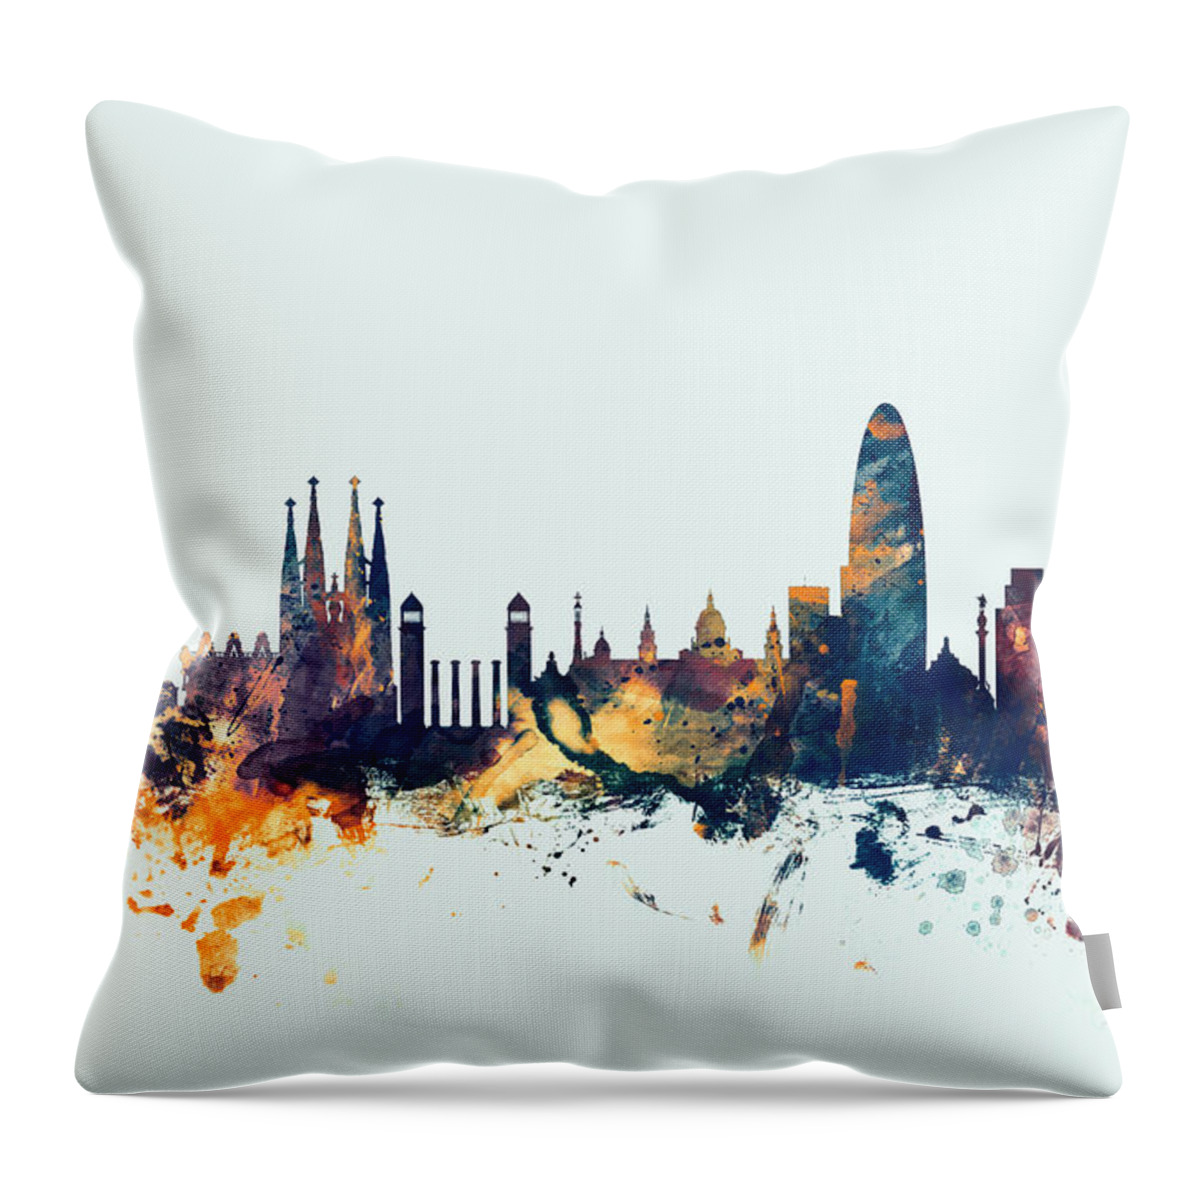 Barcelona Throw Pillow featuring the digital art Barcelona Spain Skyline by Michael Tompsett